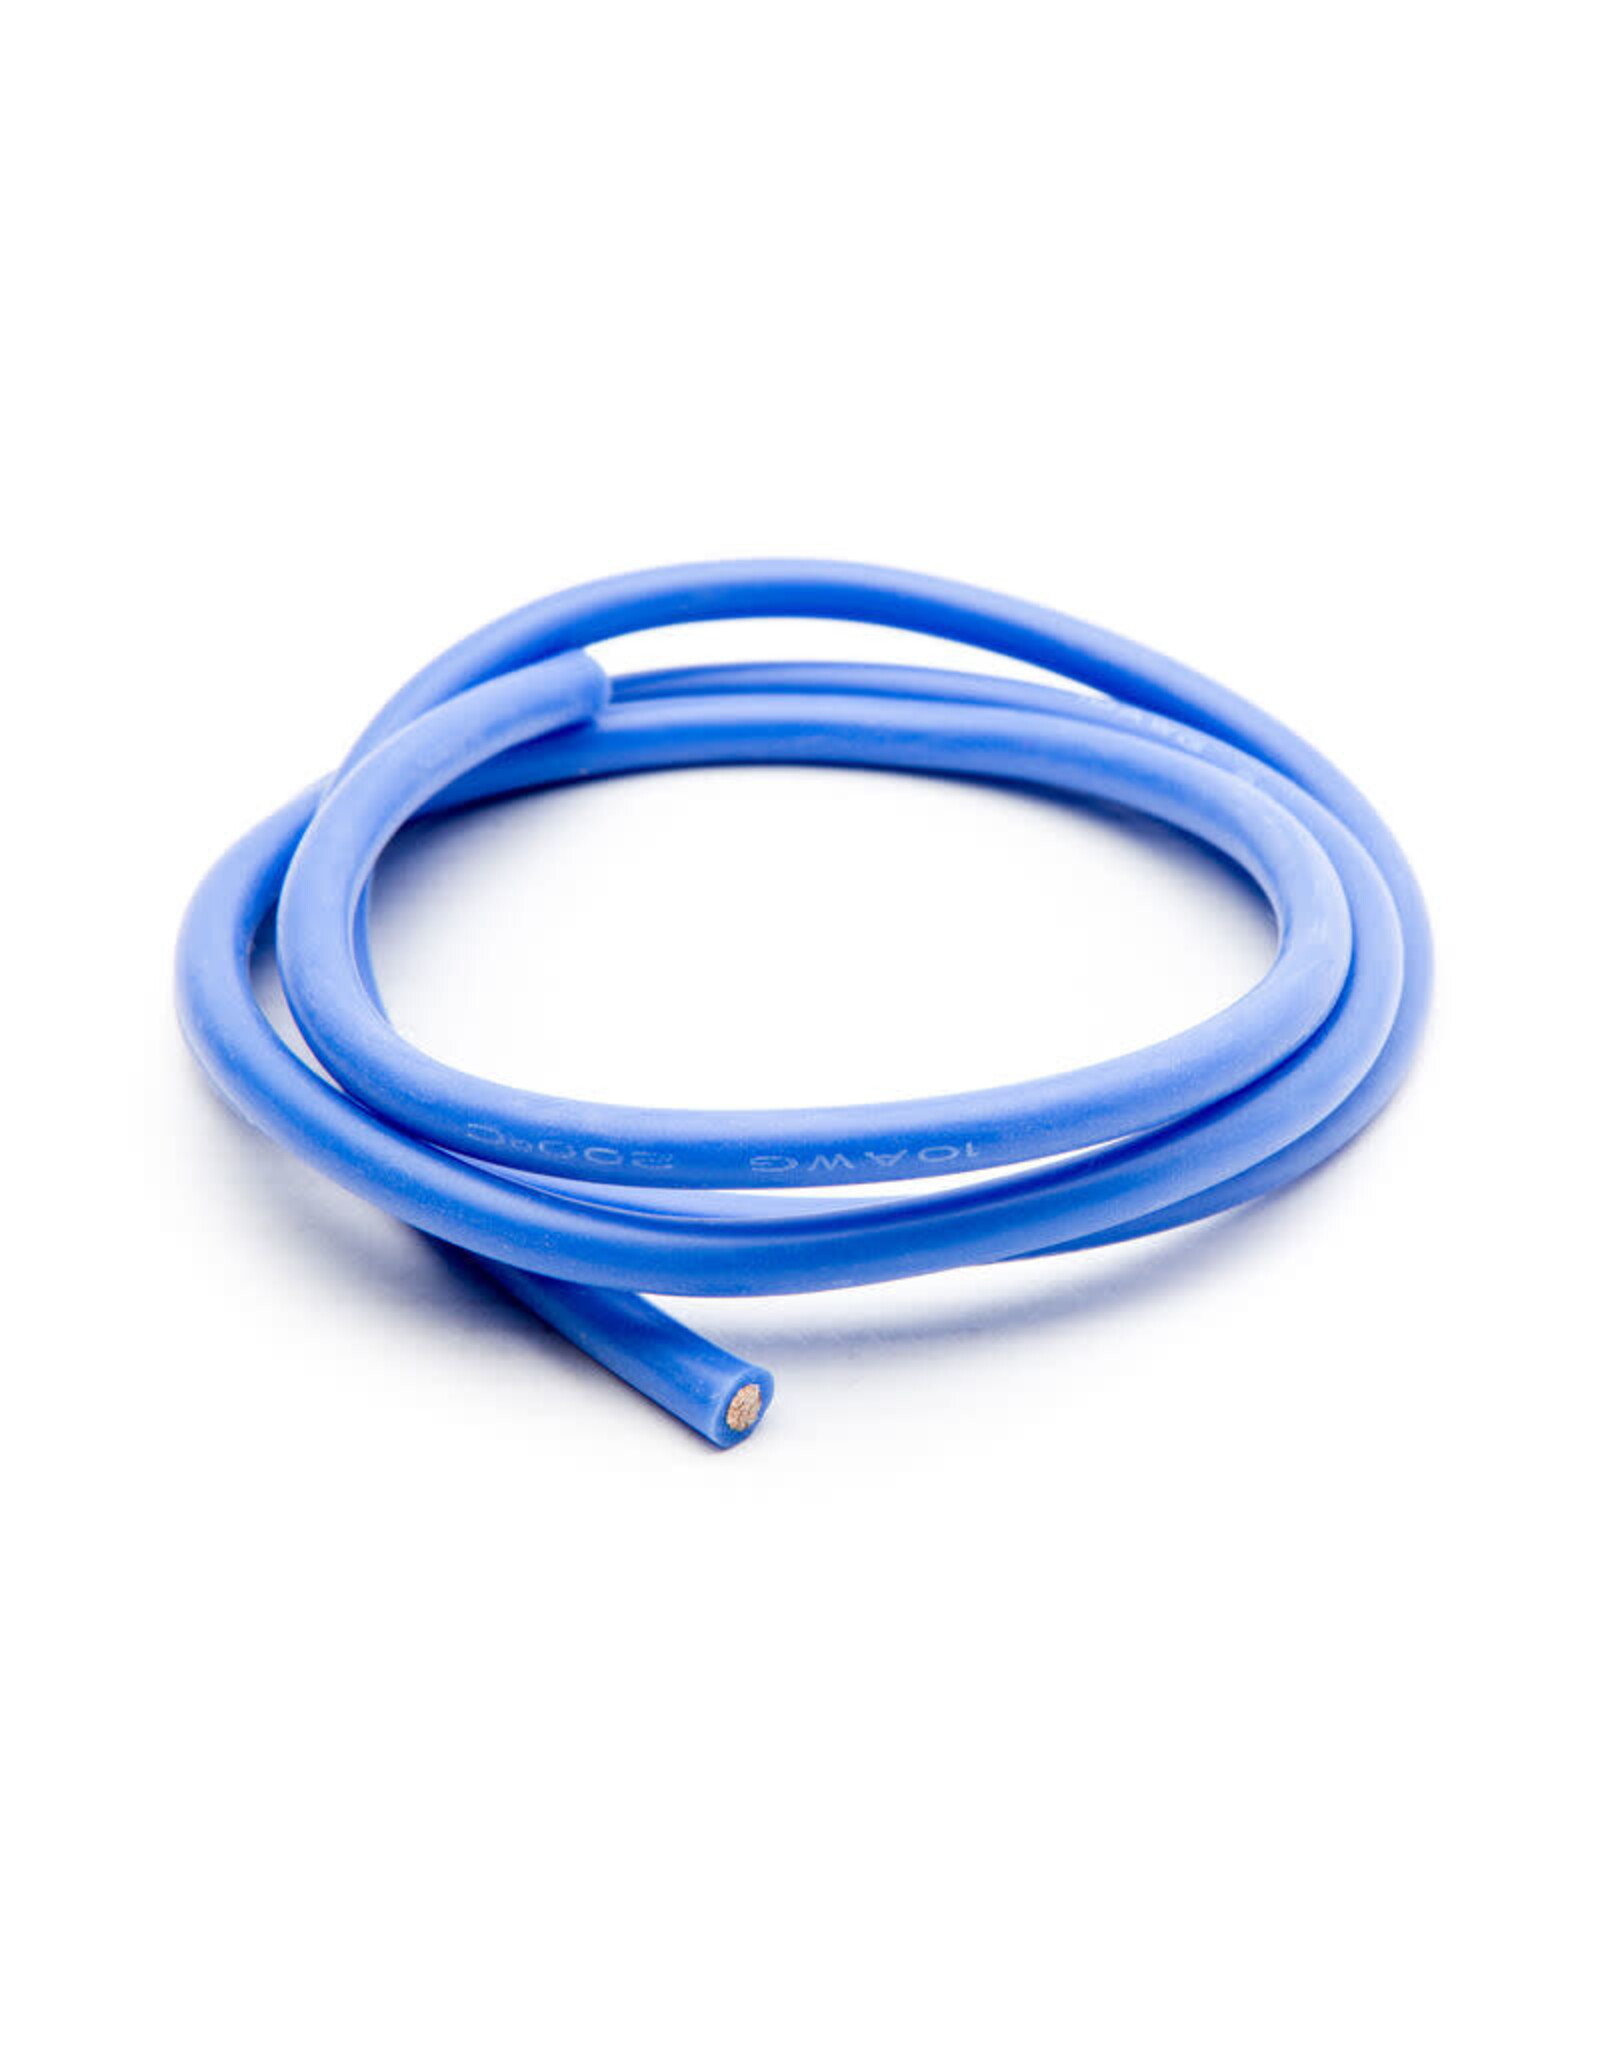 Dynamite 10AWG Silicone Wire 3', Blue